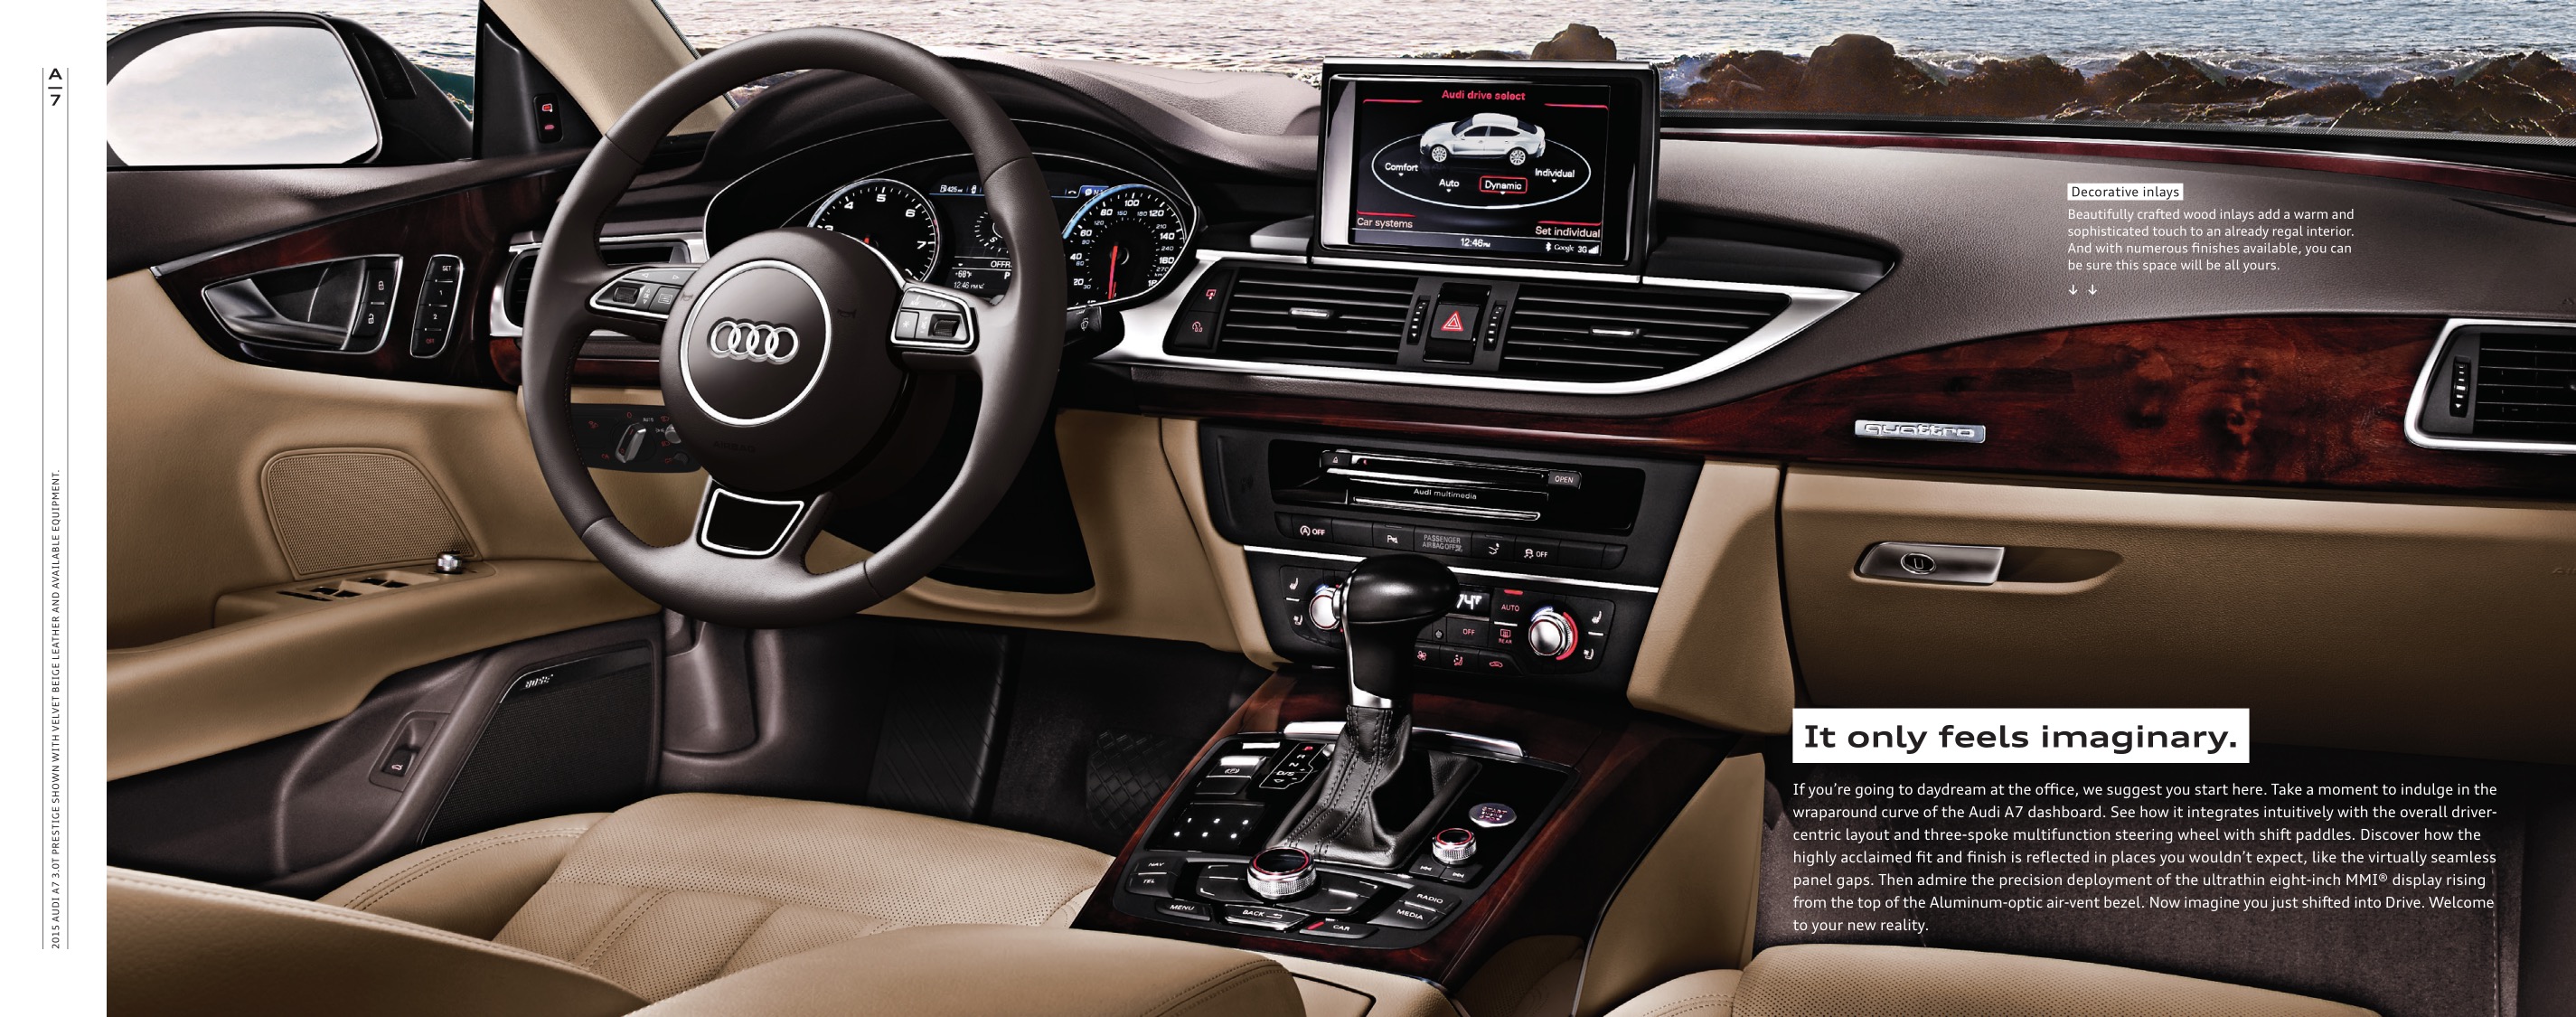 2015 Audi A7 Brochure Page 8